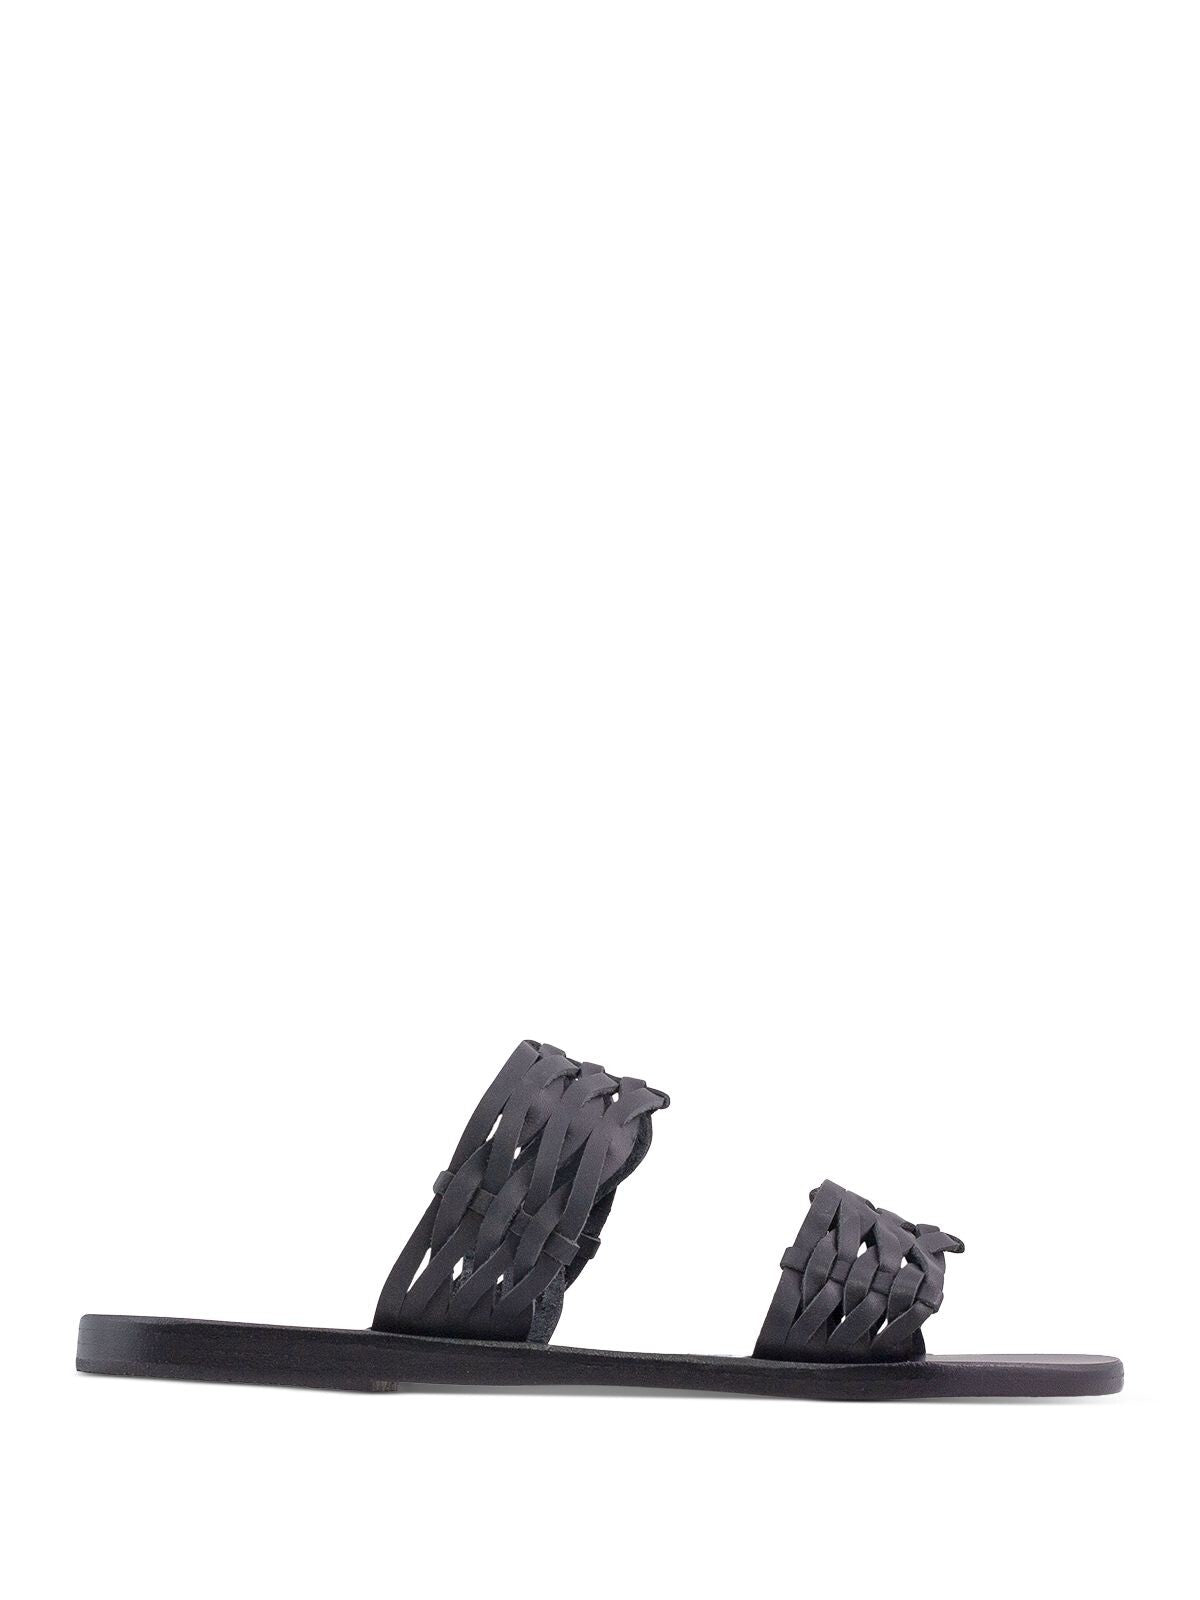 ANCIENT GREEK SANDALS Womens Black Woven Melia Round Toe Slip On Leather Slide Sandals Shoes 37